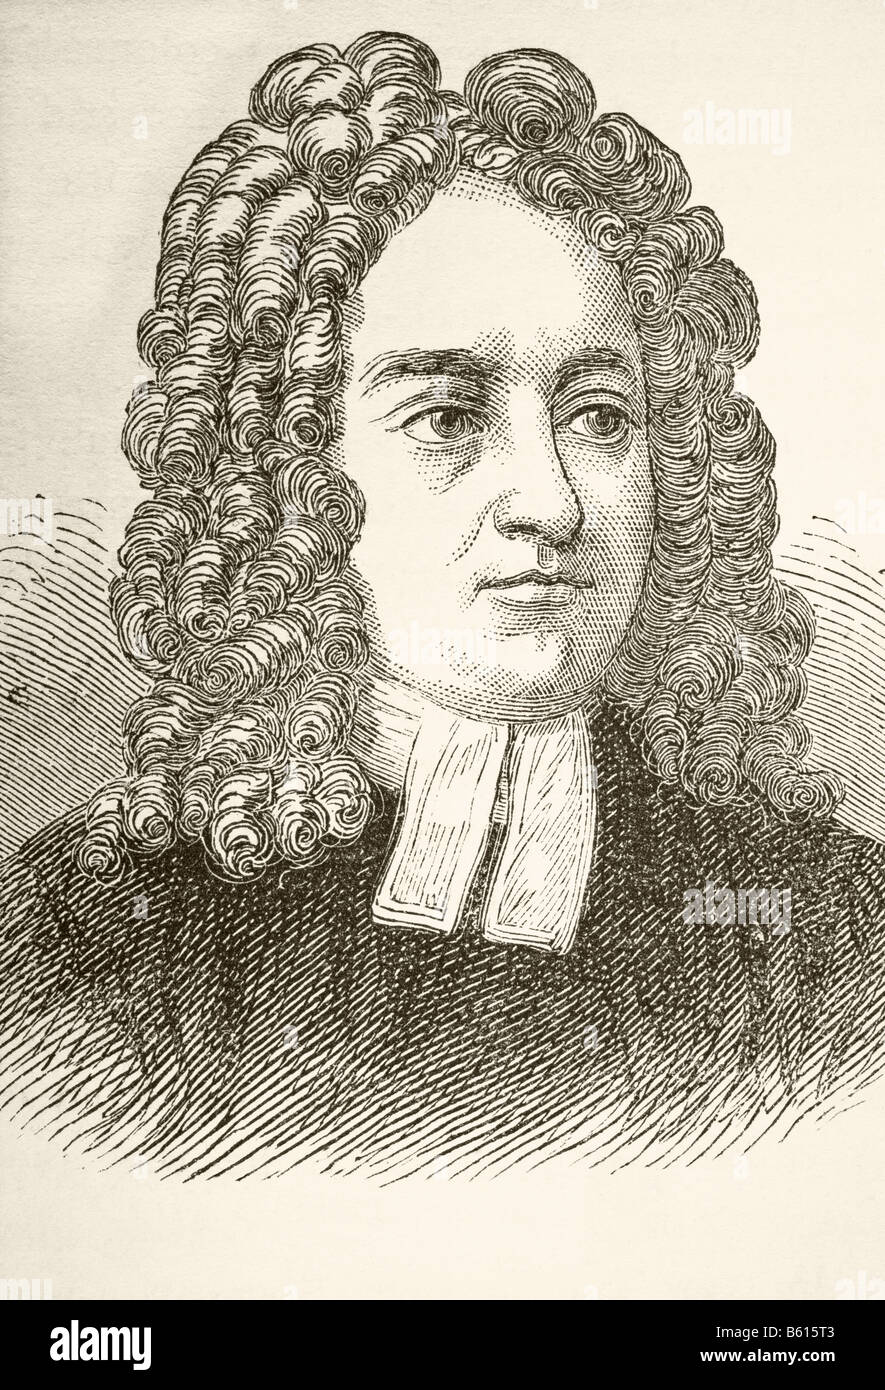 Jonathan Swift, 1667 - 1745. Anglo-Irish author. Stock Photo